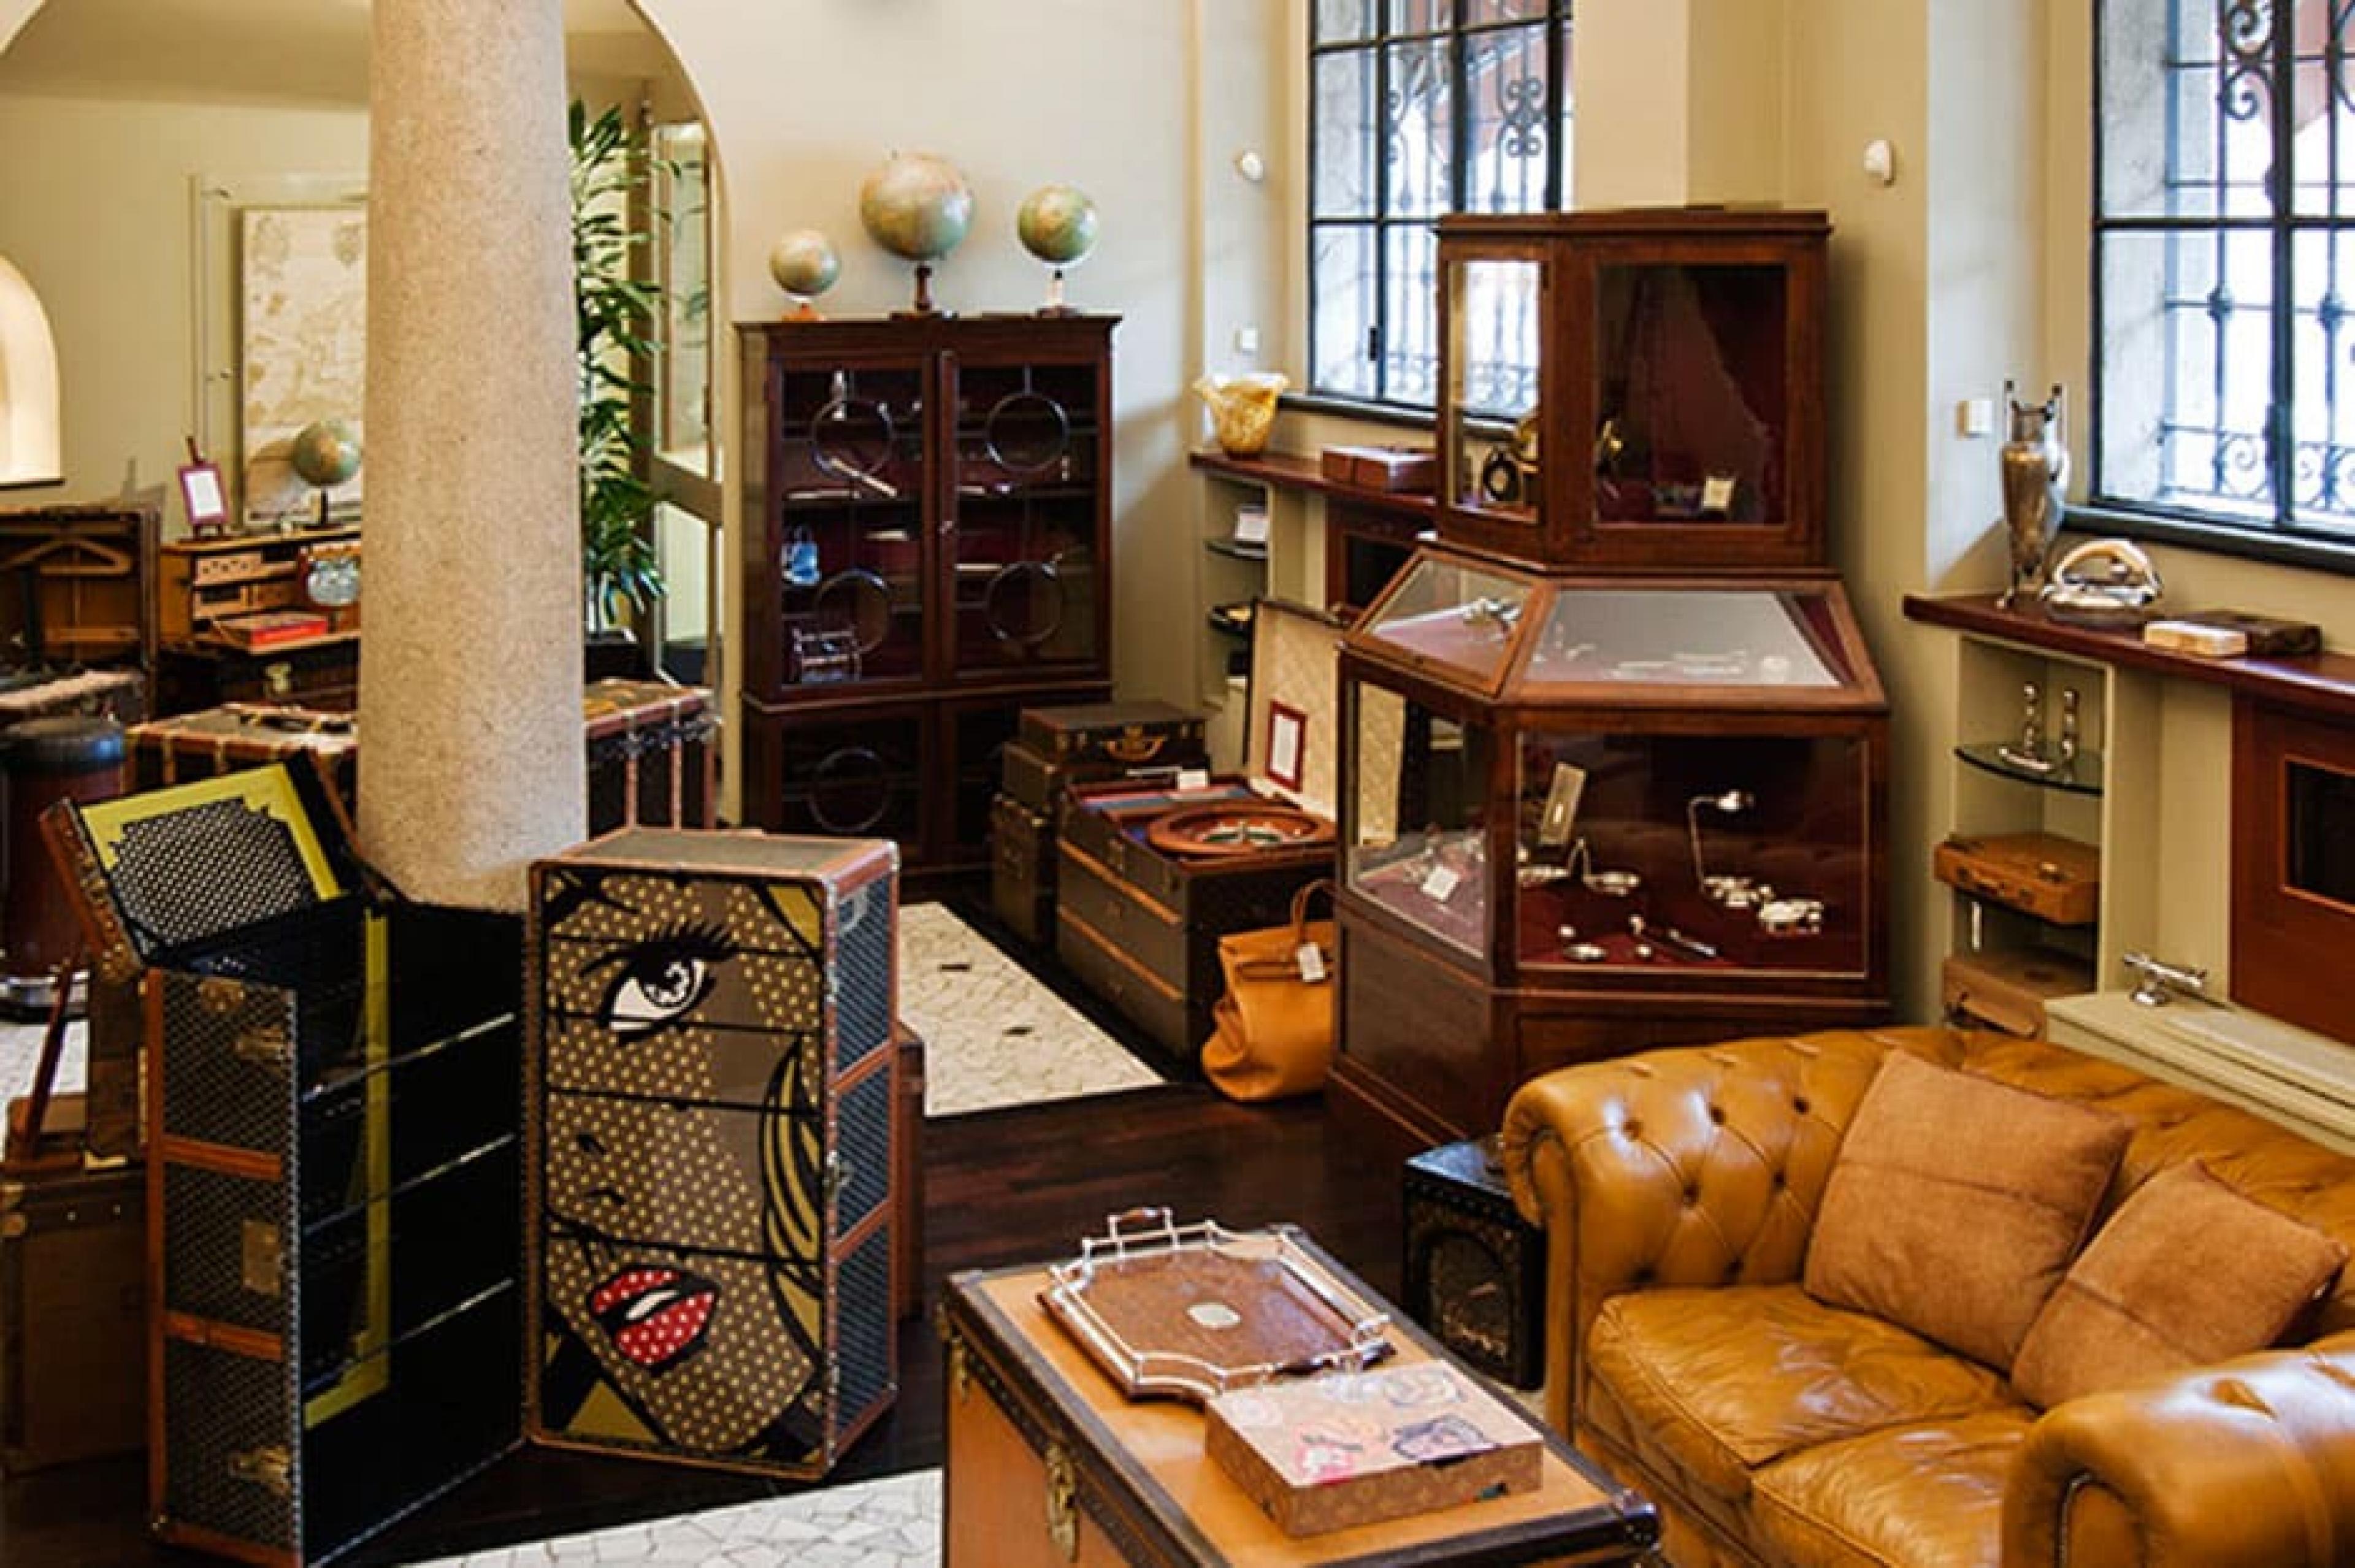 Interior at  Bernardini Luxury Vintage, Milan, Italy - Courtesy of Bernardini Luxury Vintage